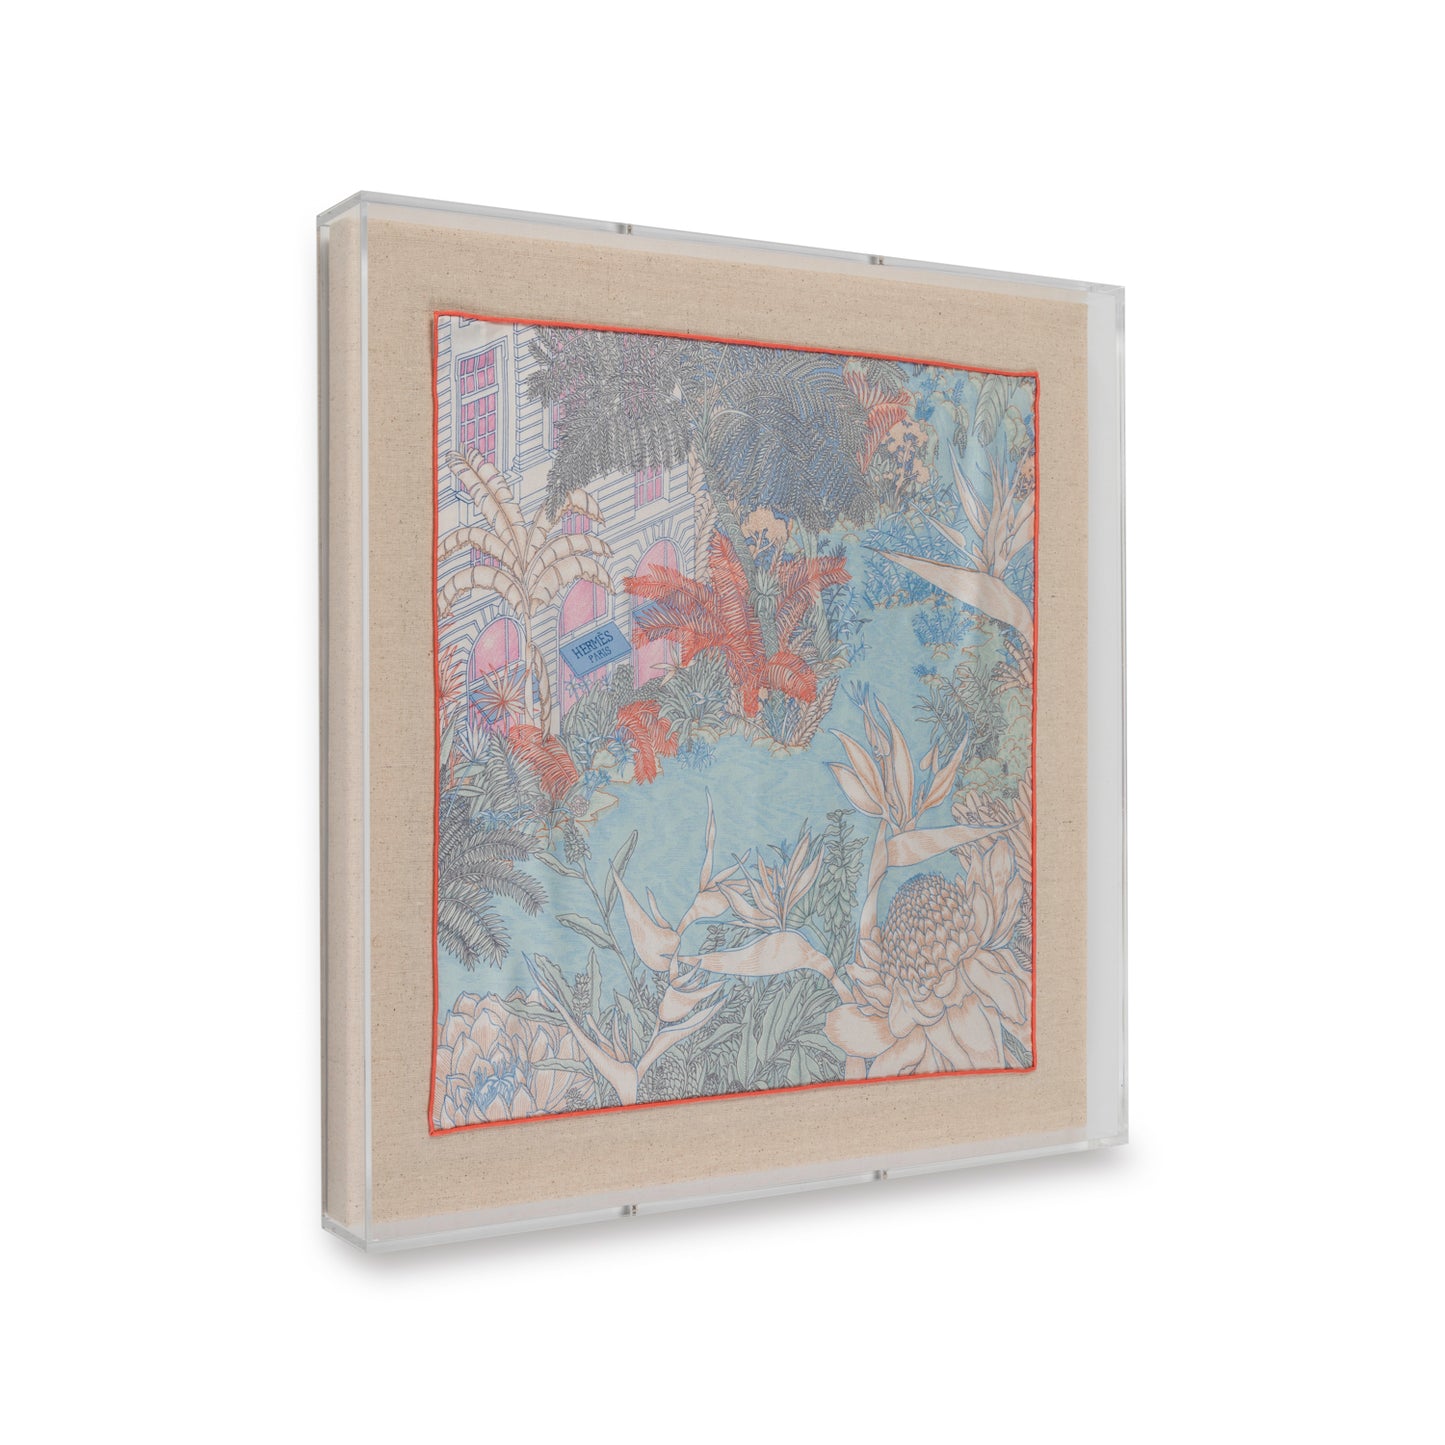 Framed Hermès Faubourg Tropical Bleu Ciel Red Fronds Silk Scarf in a 20x20x2" Shadowbox